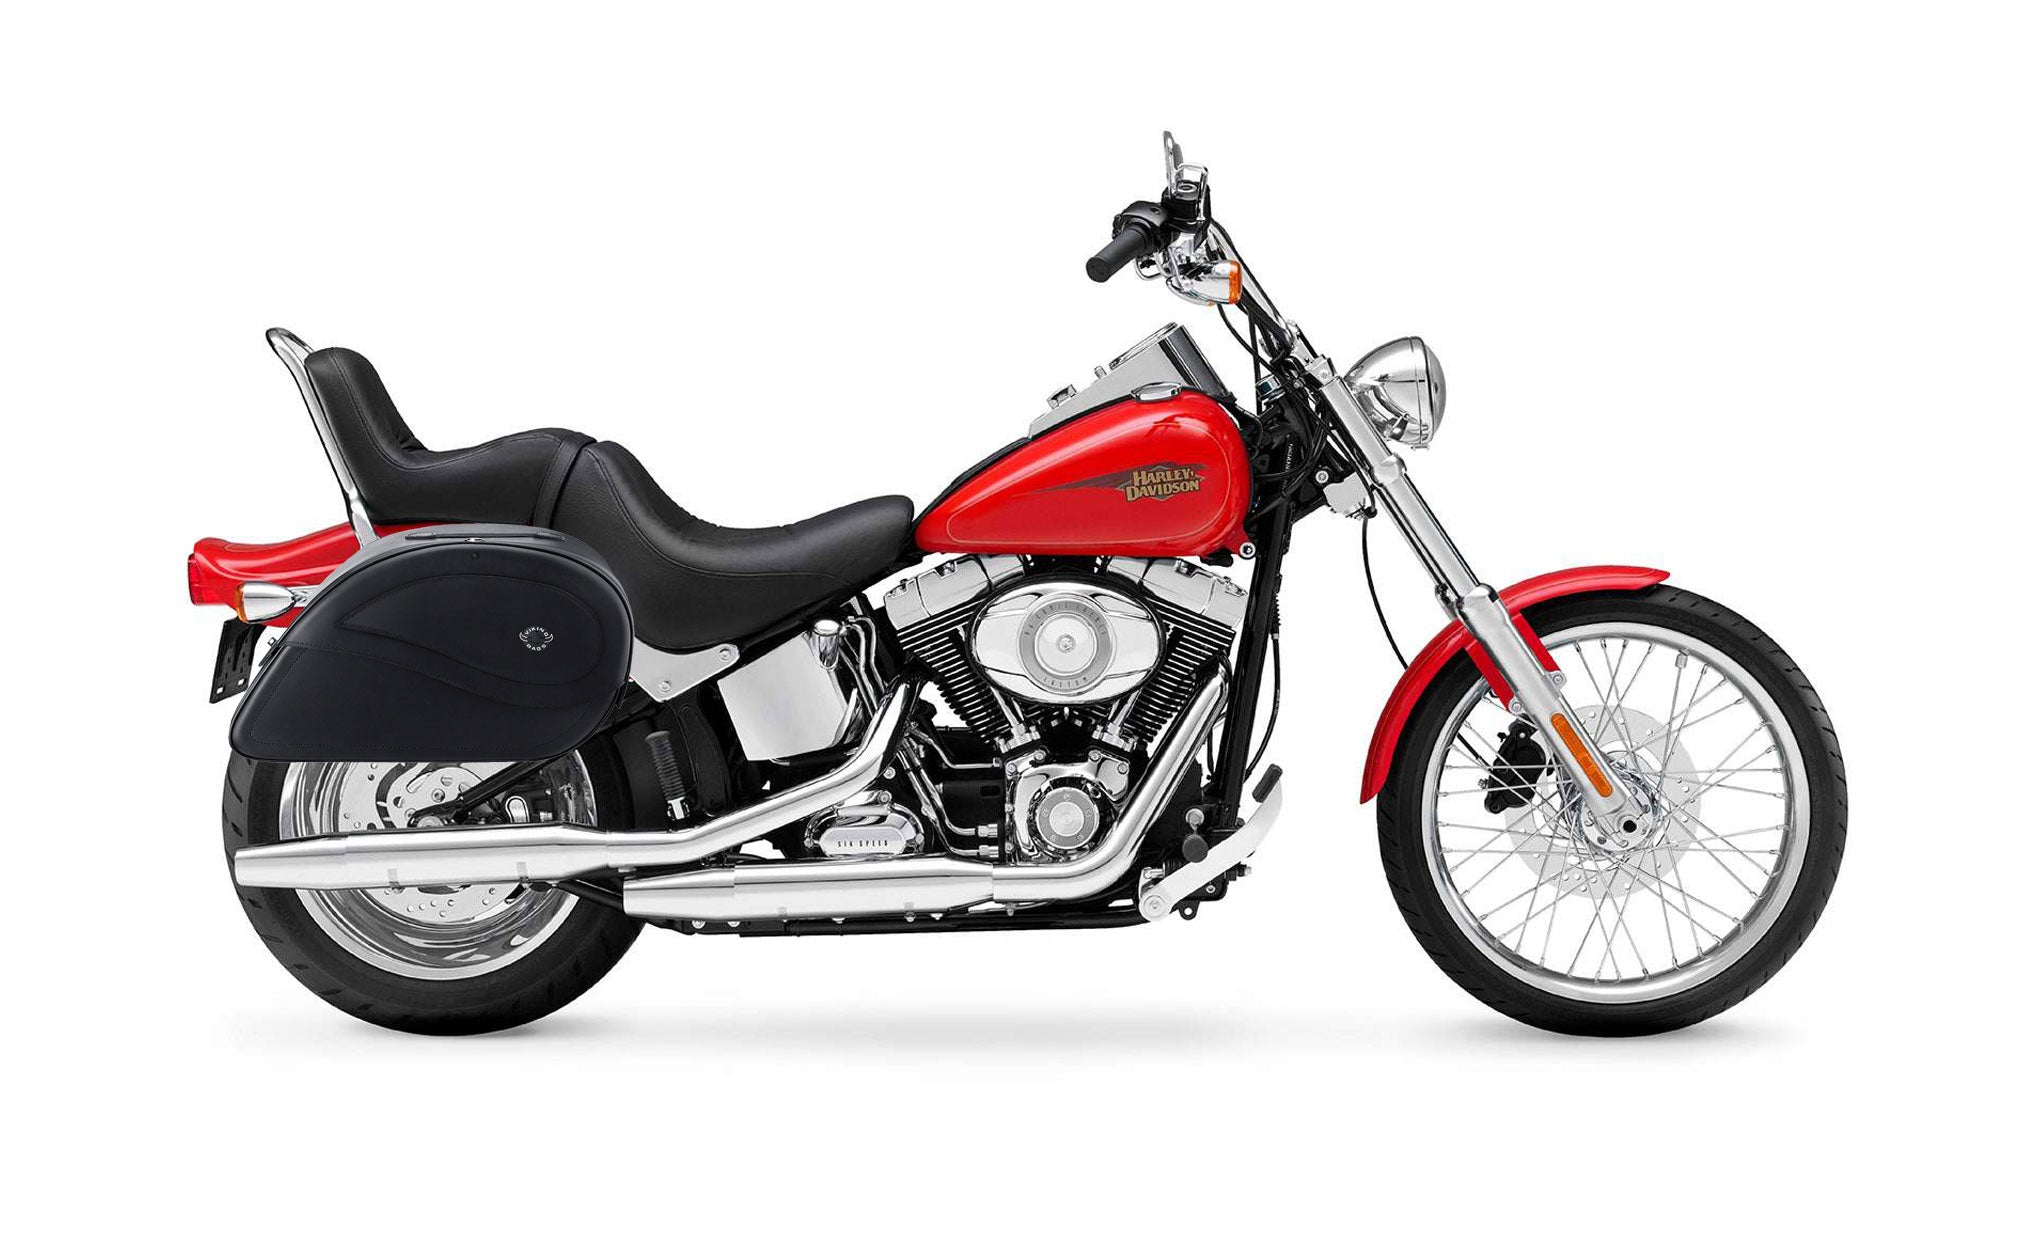 Viking Ultimate Large Leather Motorcycle Saddlebags For Harley Davidson Softail Custom Fxstc on Bike Photo @expand